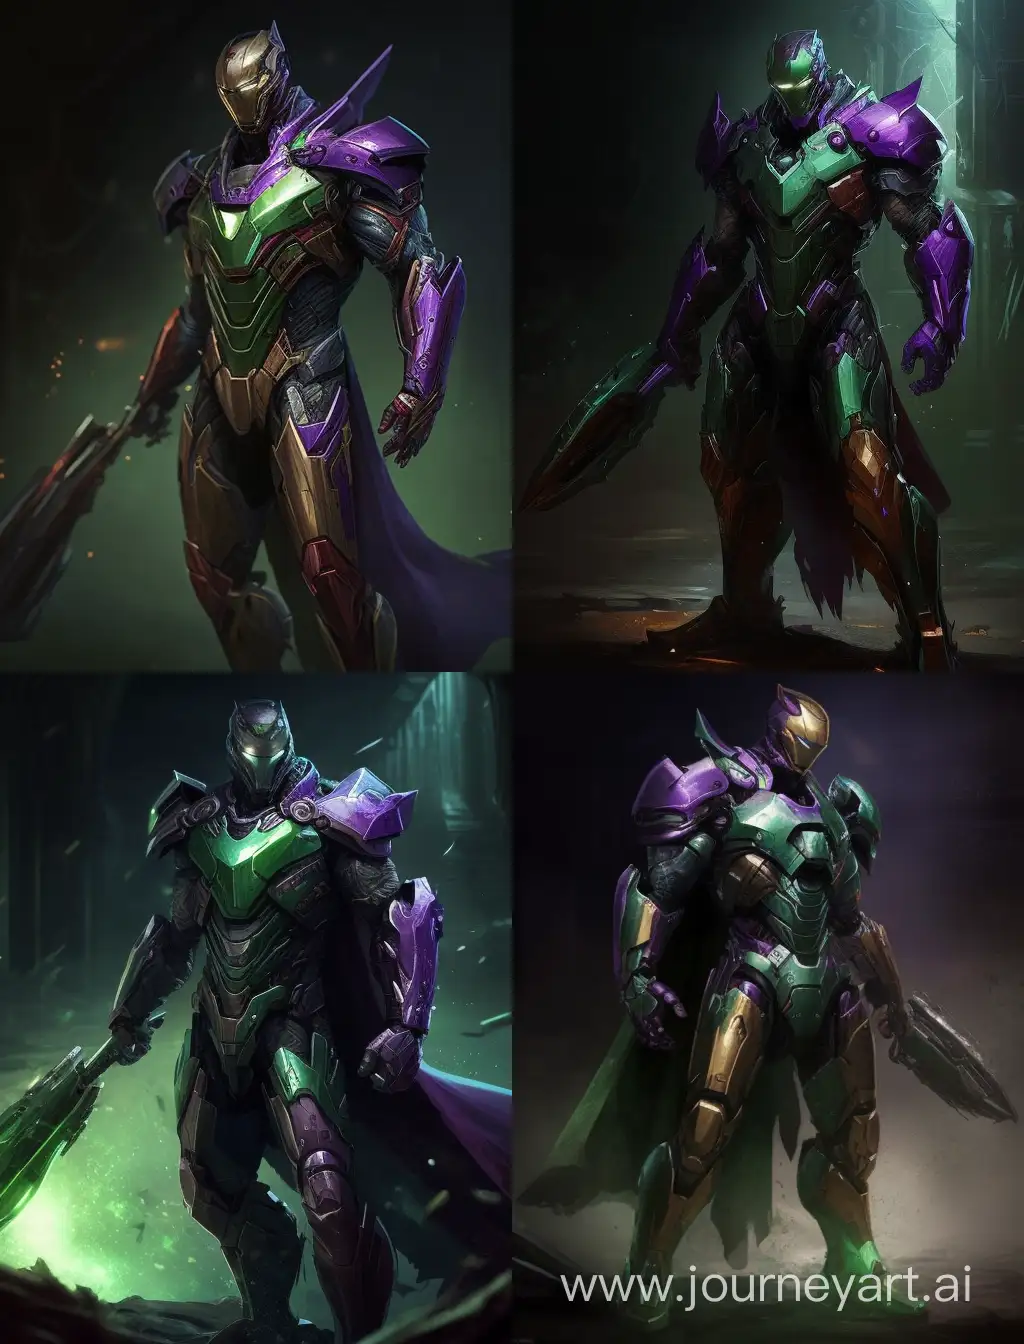 Futuristic-Space-Warrior-in-Striking-GreenPurple-Iron-Man-Suit